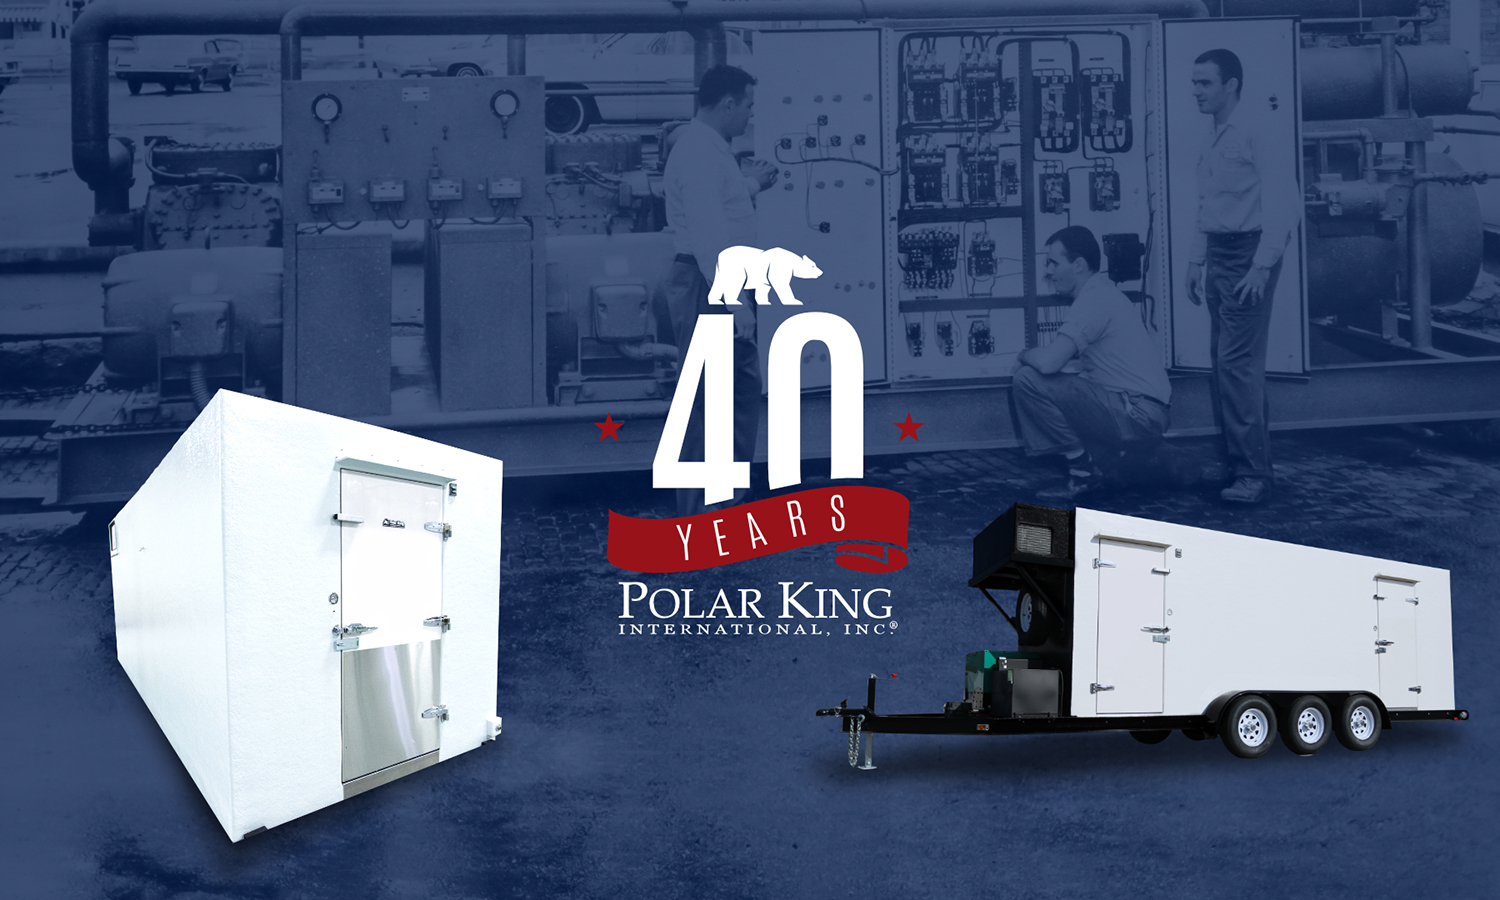 Polar King International Celebrates 40 Years of Innovation